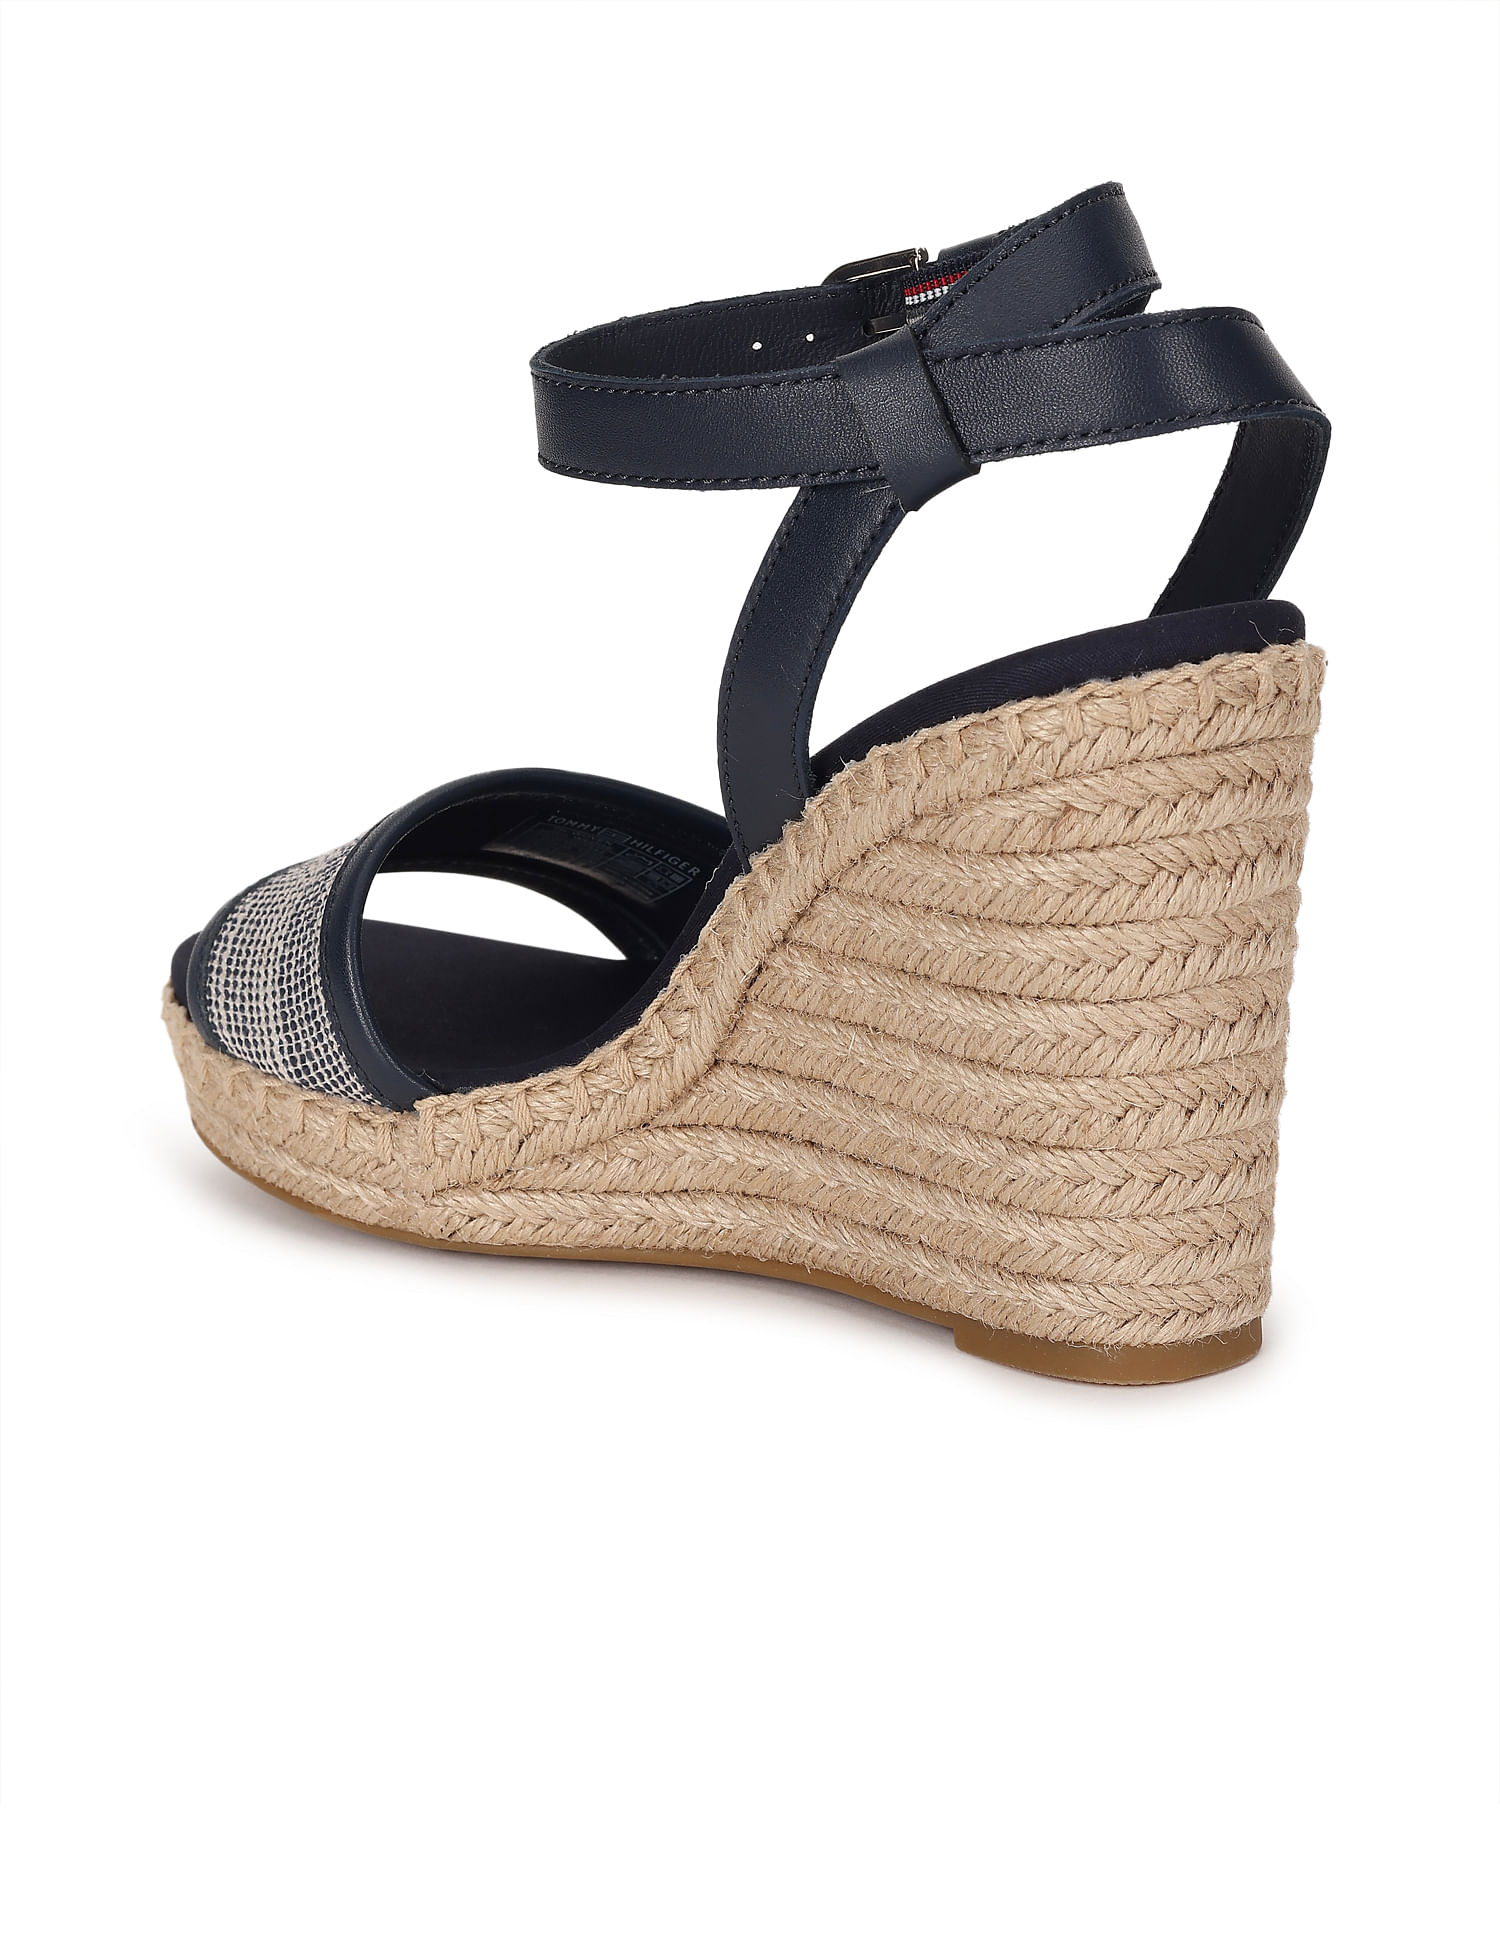 Buy UUNDA Fashion Sandals for Women Wedge Heel Sandals Shoes Woman High  Heels Ladies Sandals (Black, 2) at Amazon.in